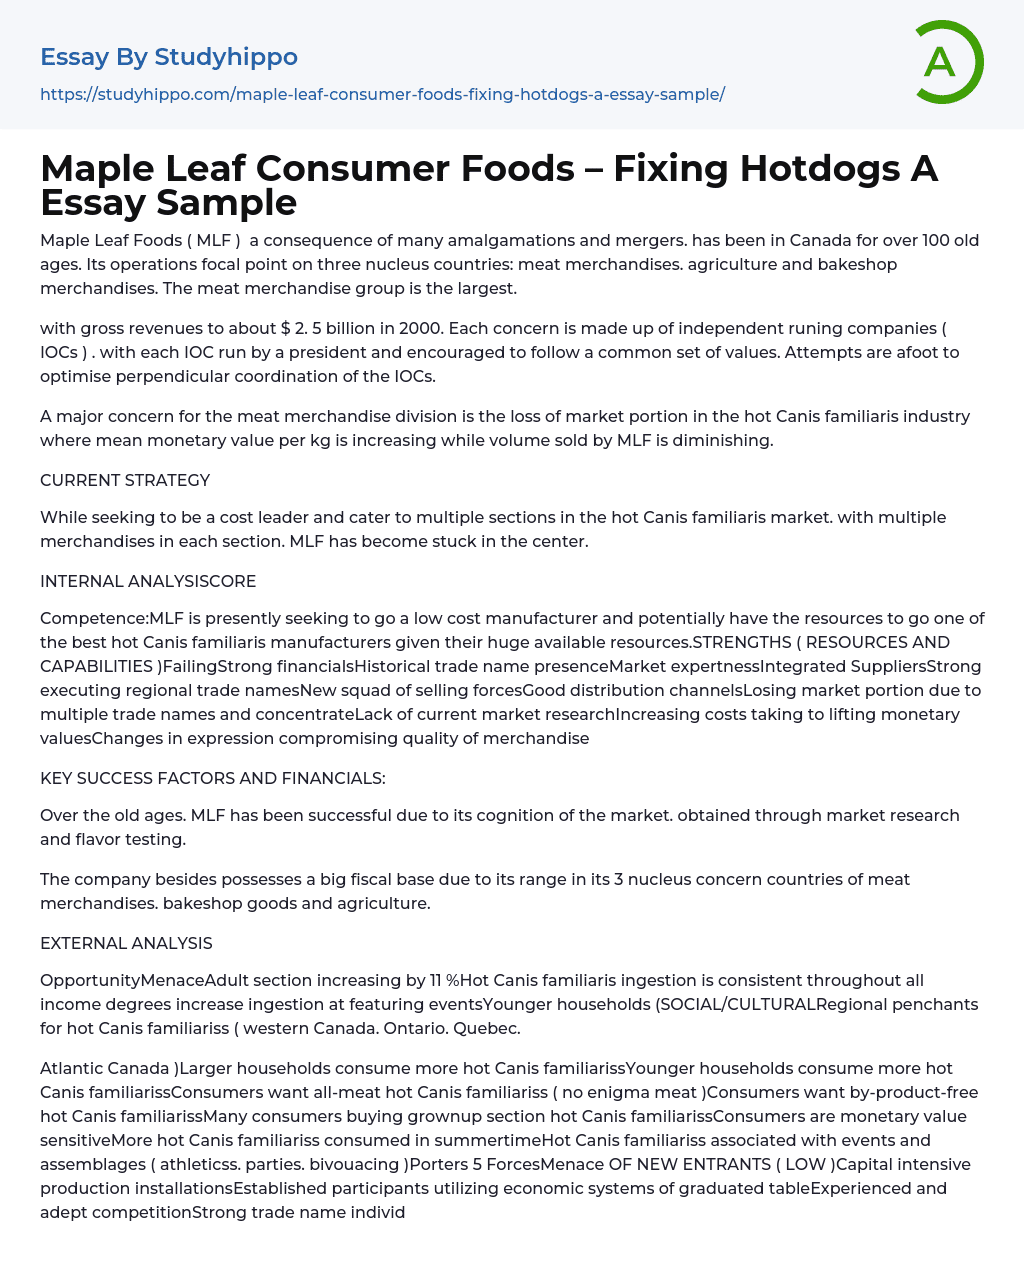 Maple Leaf Consumer Foods – Fixing Hotdogs A Essay Sample